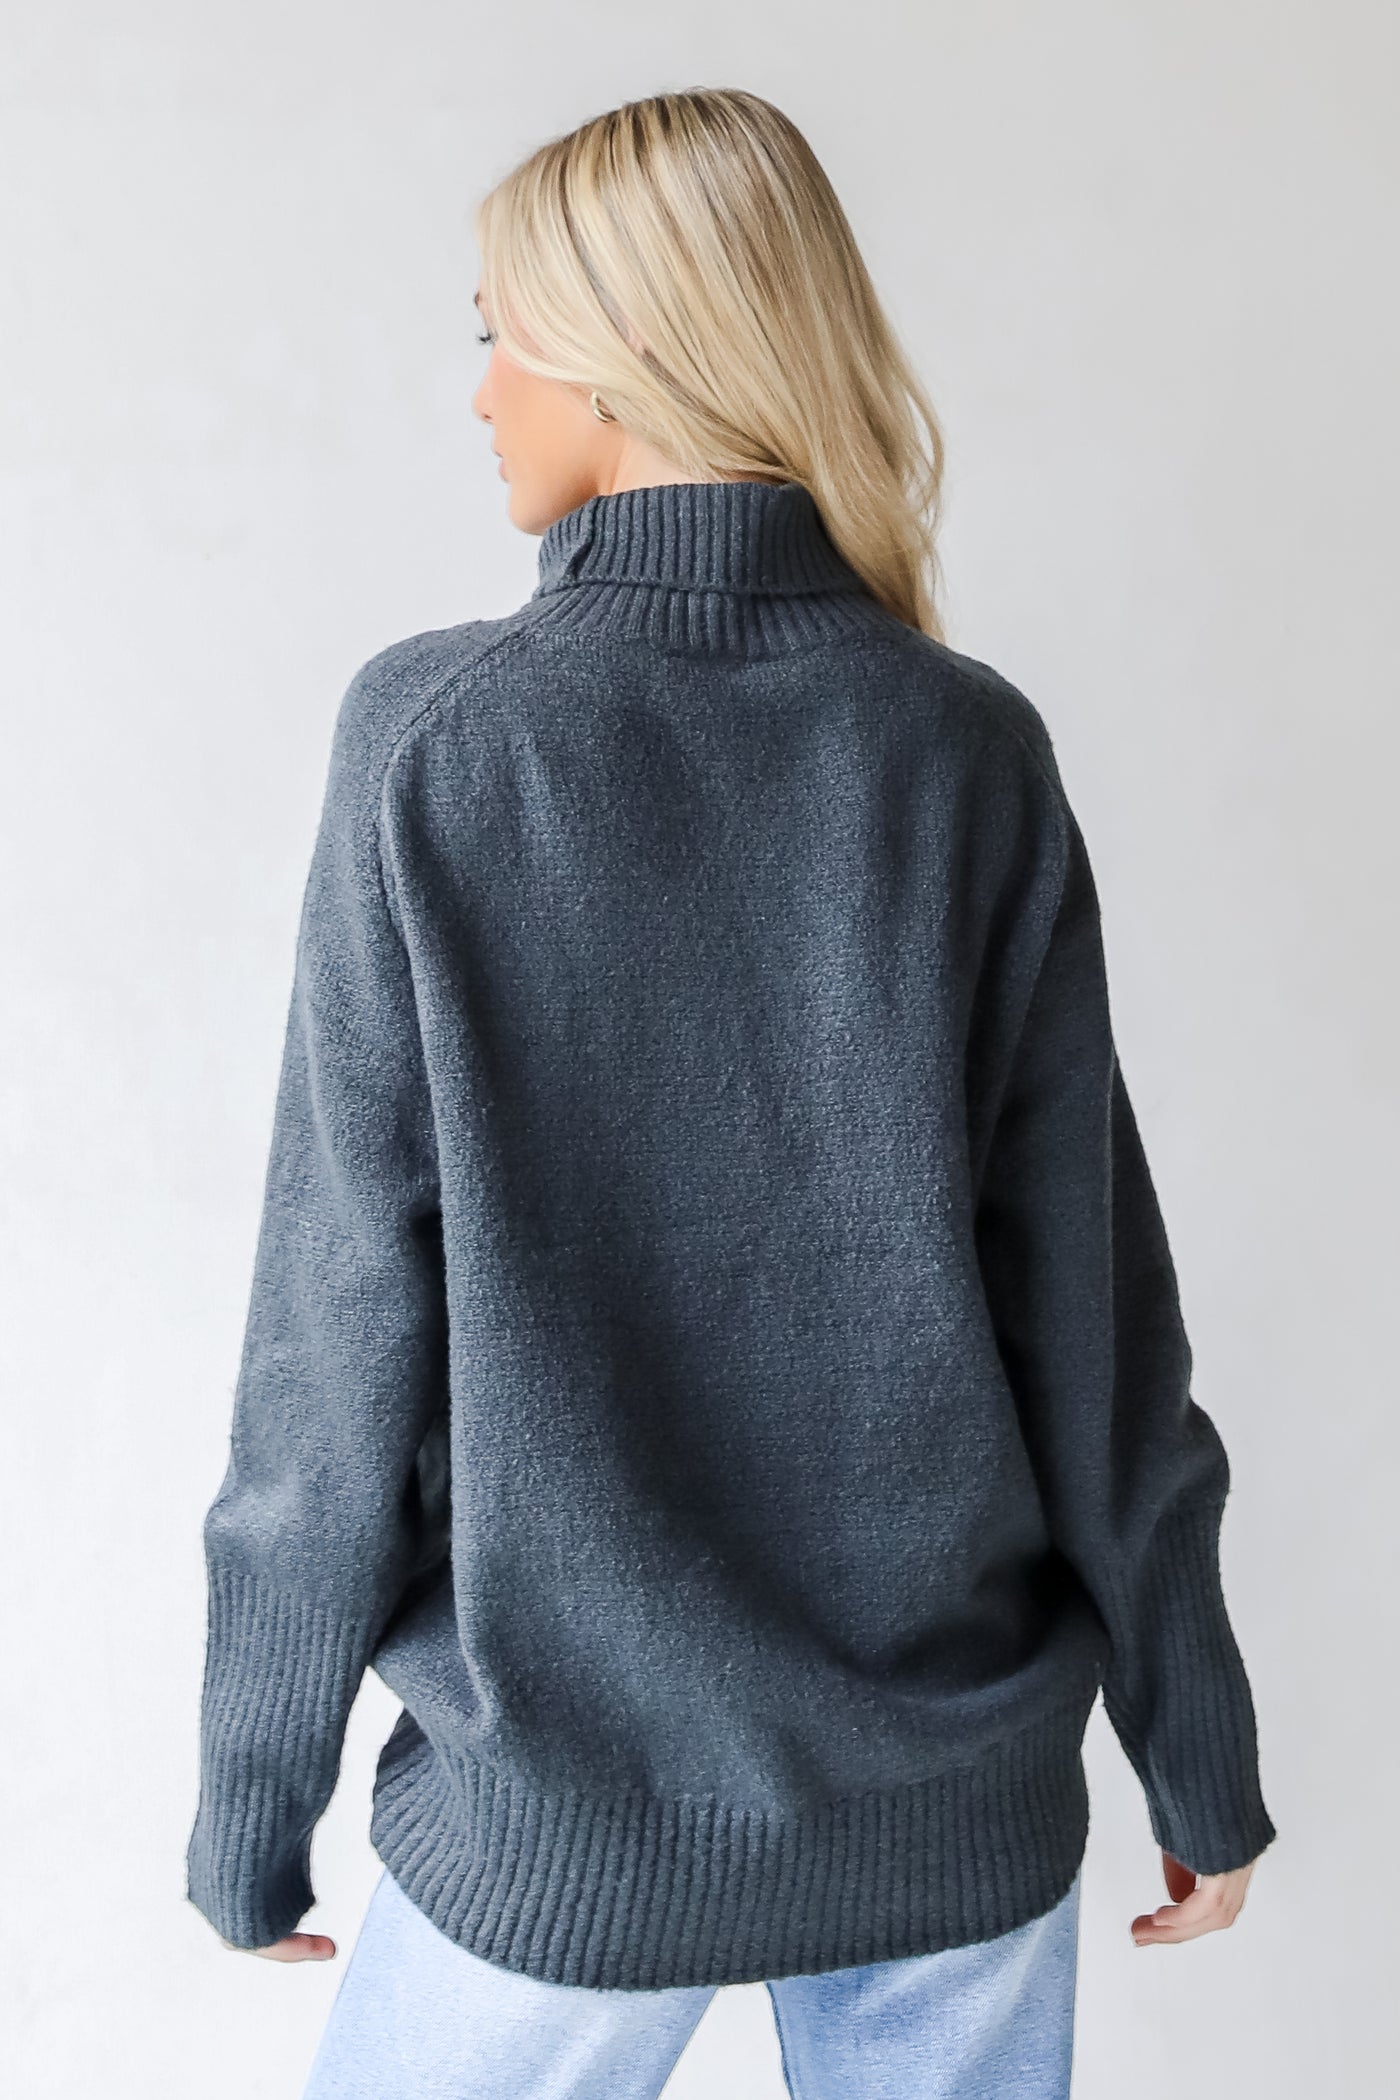 Turtleneck Sweater in denim back view